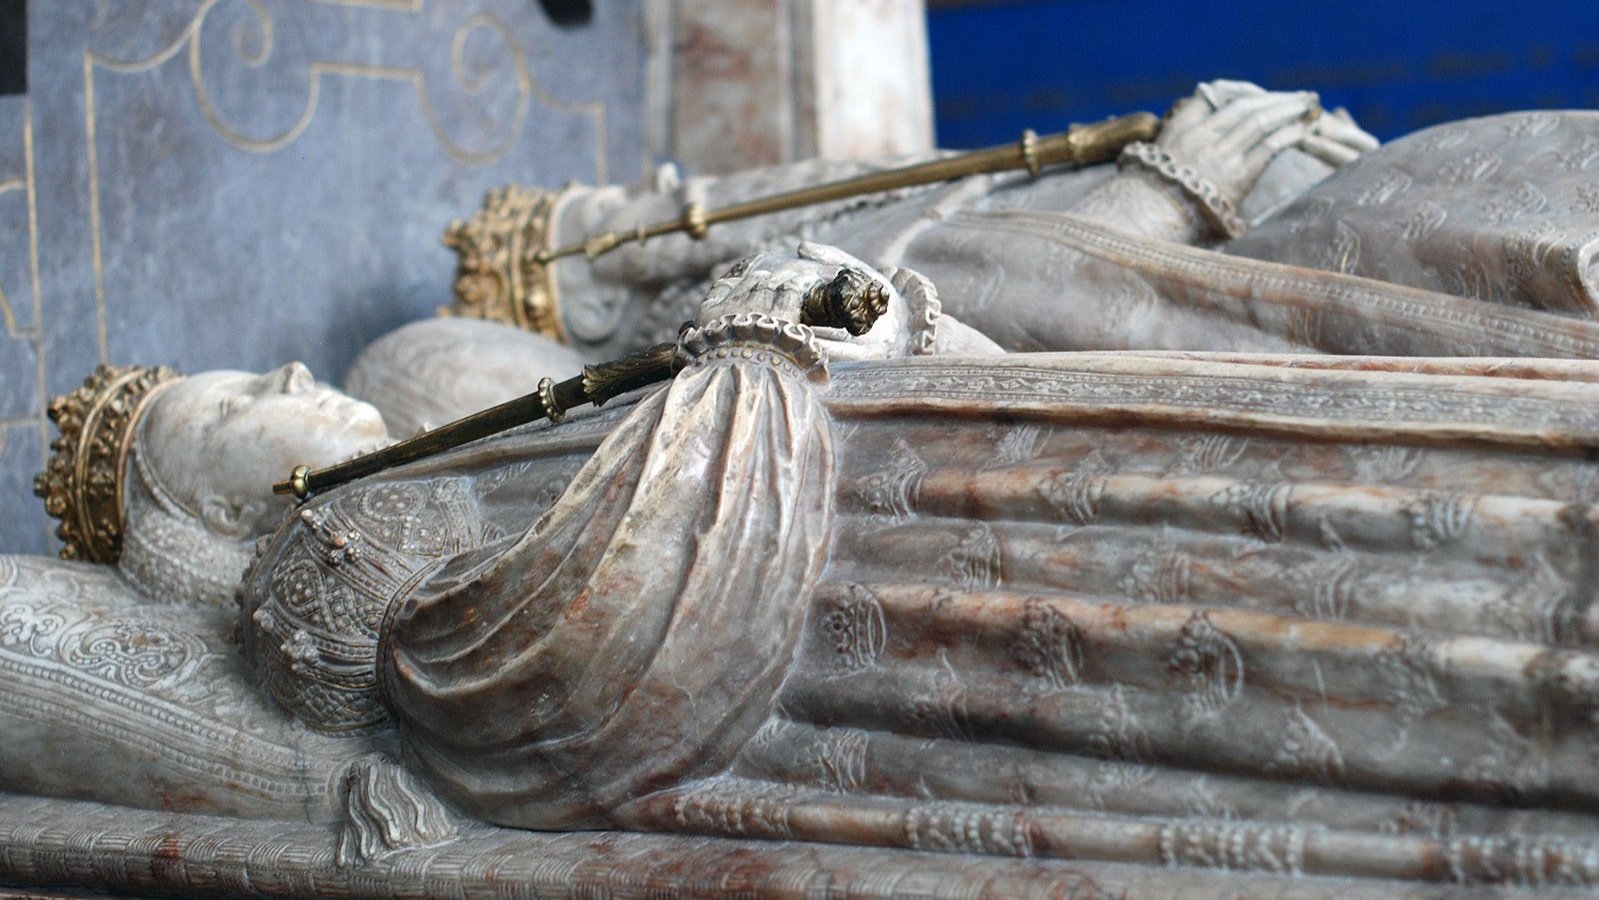 King Gustav Vasa lying in state in Uppsala cathedral (photo: DSC_0139, Flickr, CC BY 2.0)